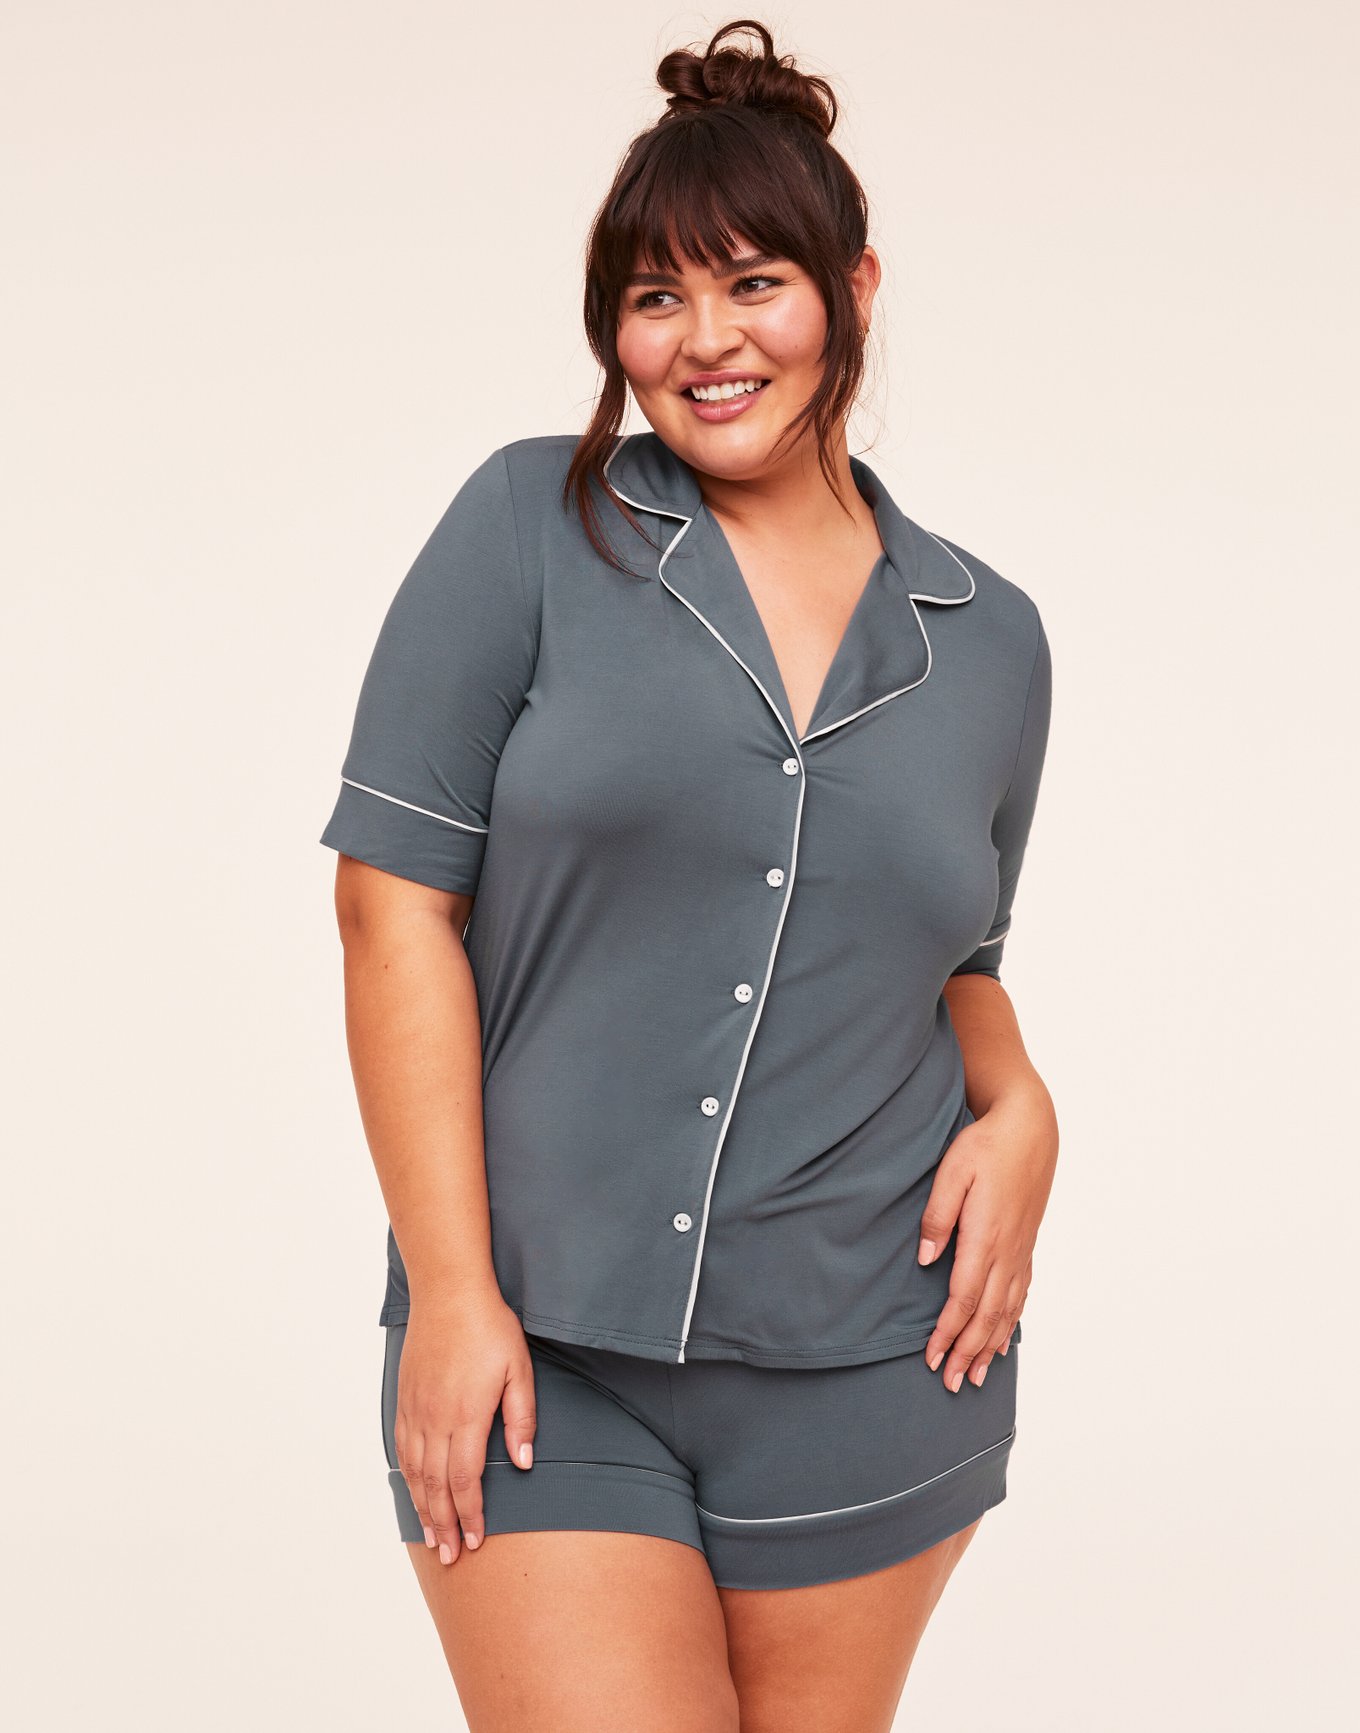 Lucky Brand Womens T-Shirt Plus Size XL Gray Star Print Soft Knit Short  Sleeve